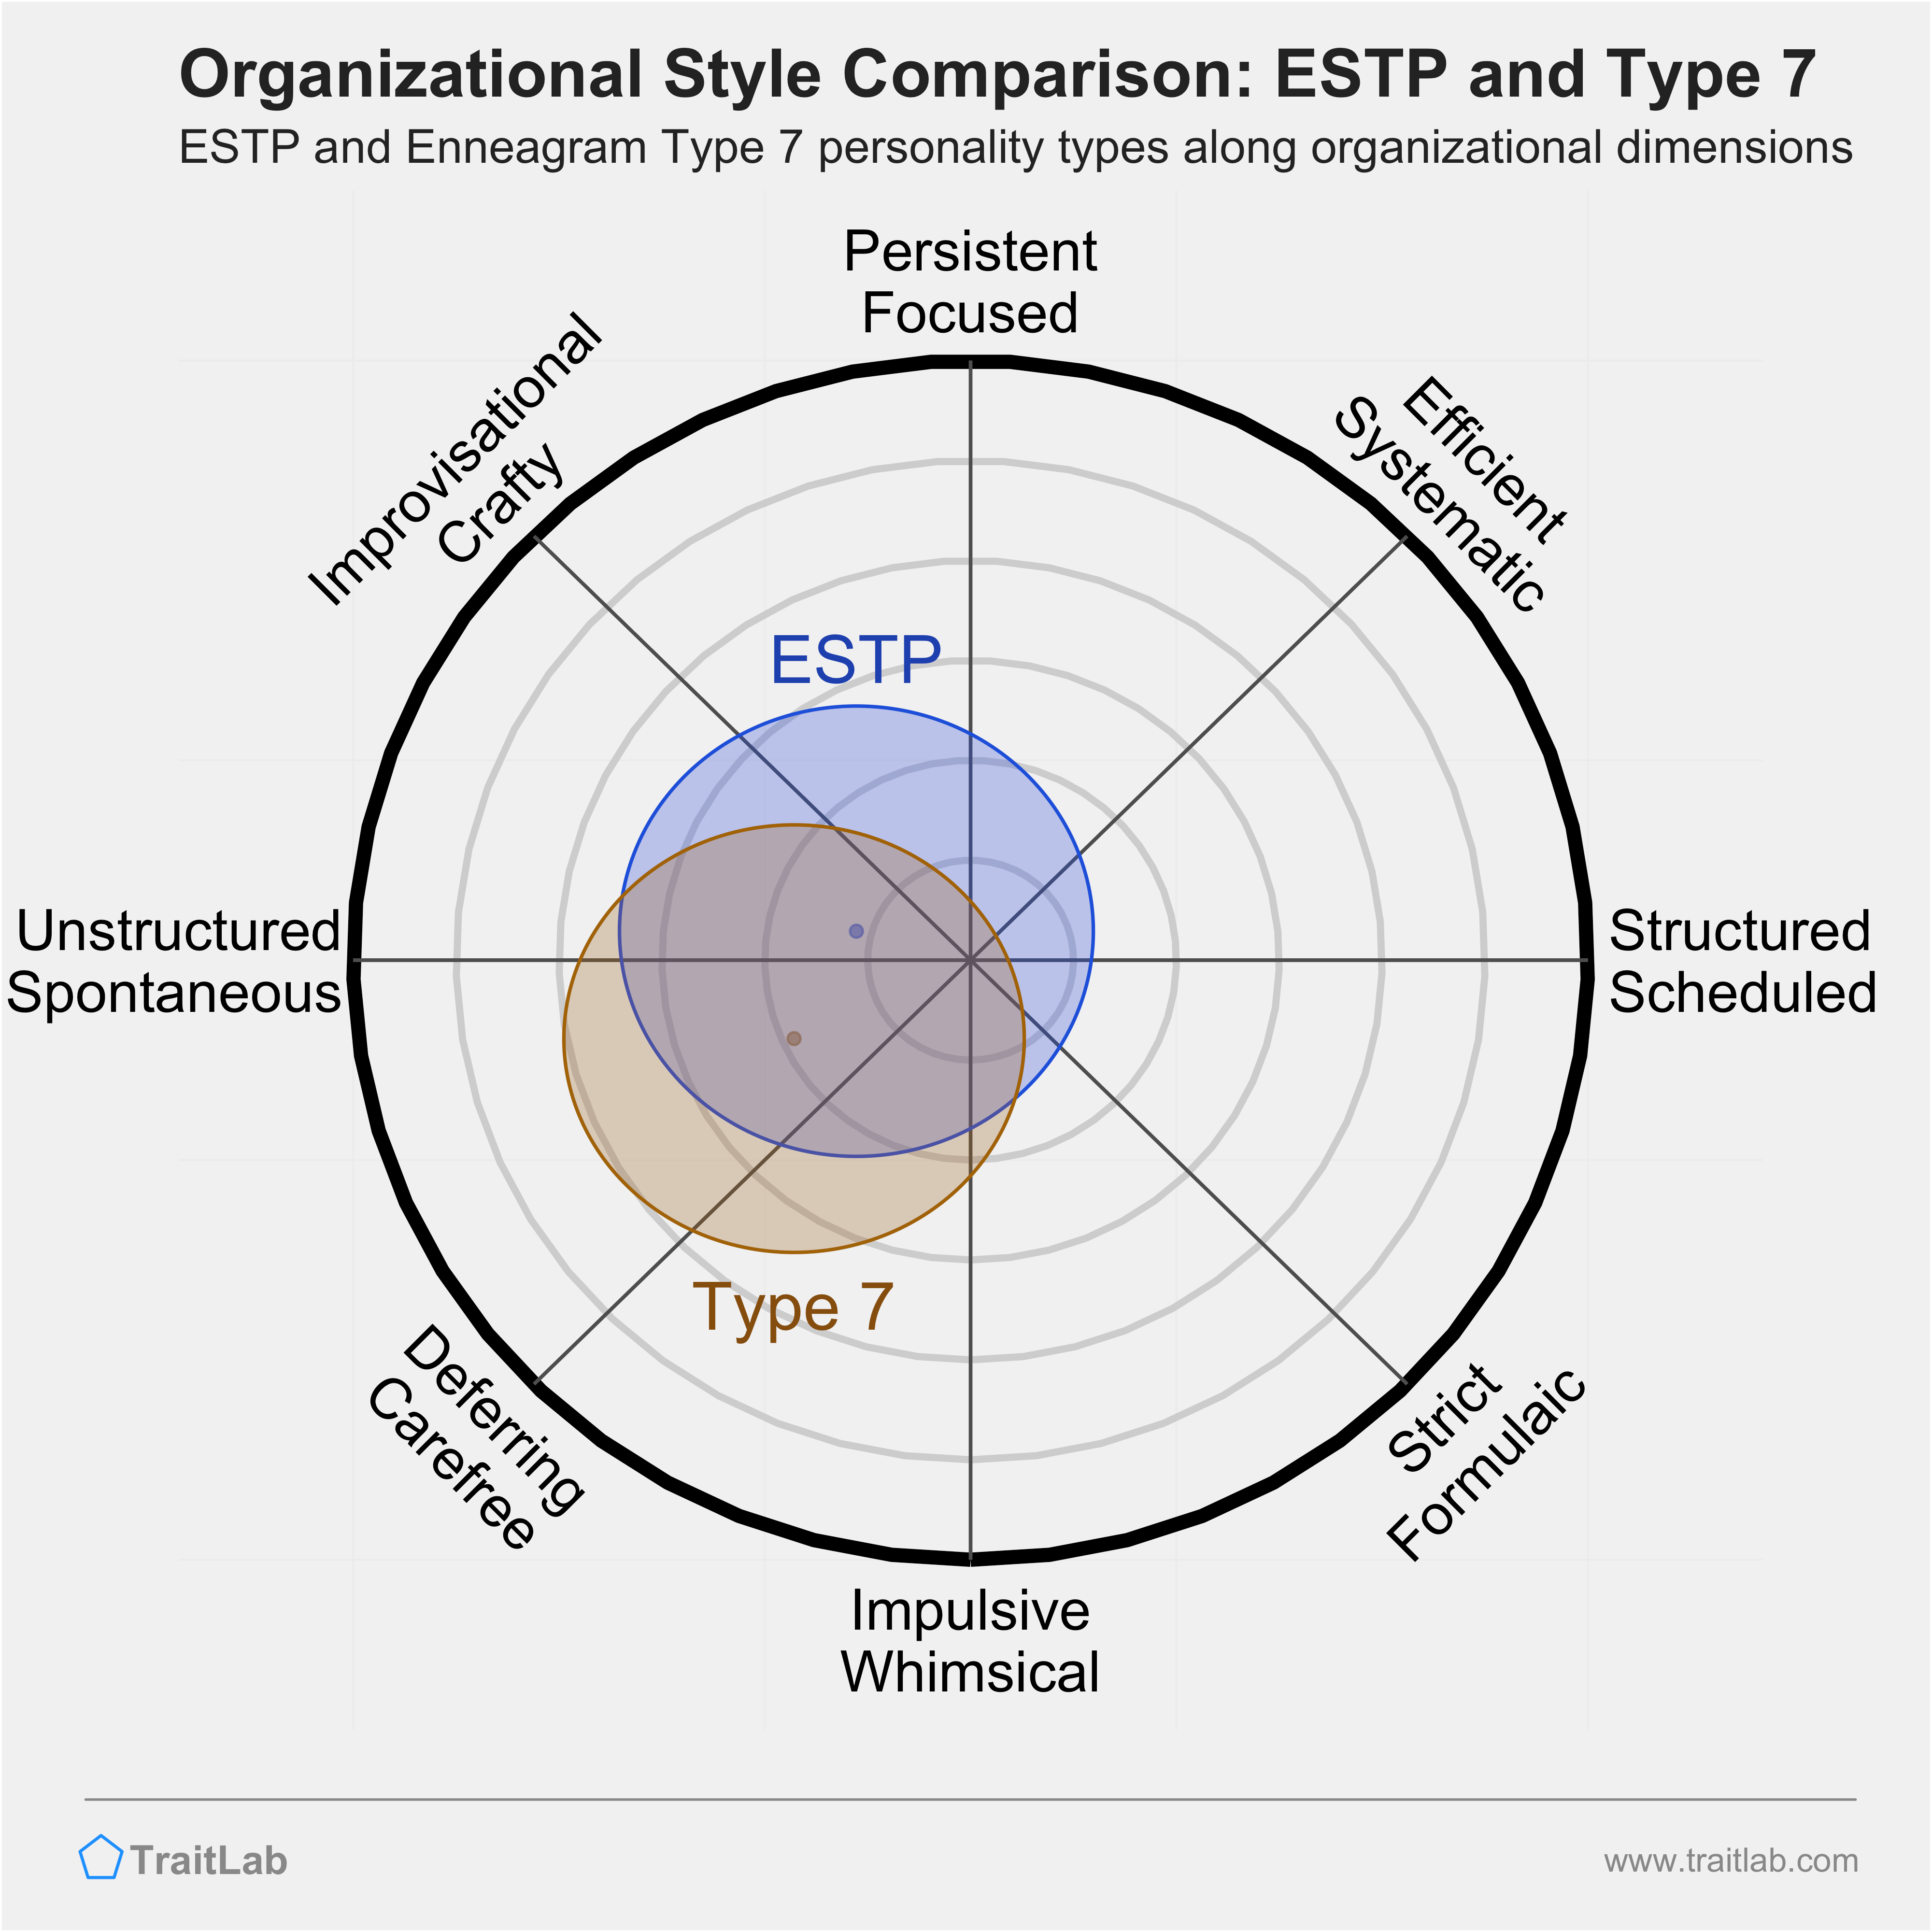 ESTP and Type 7 comparison across organizational dimensions